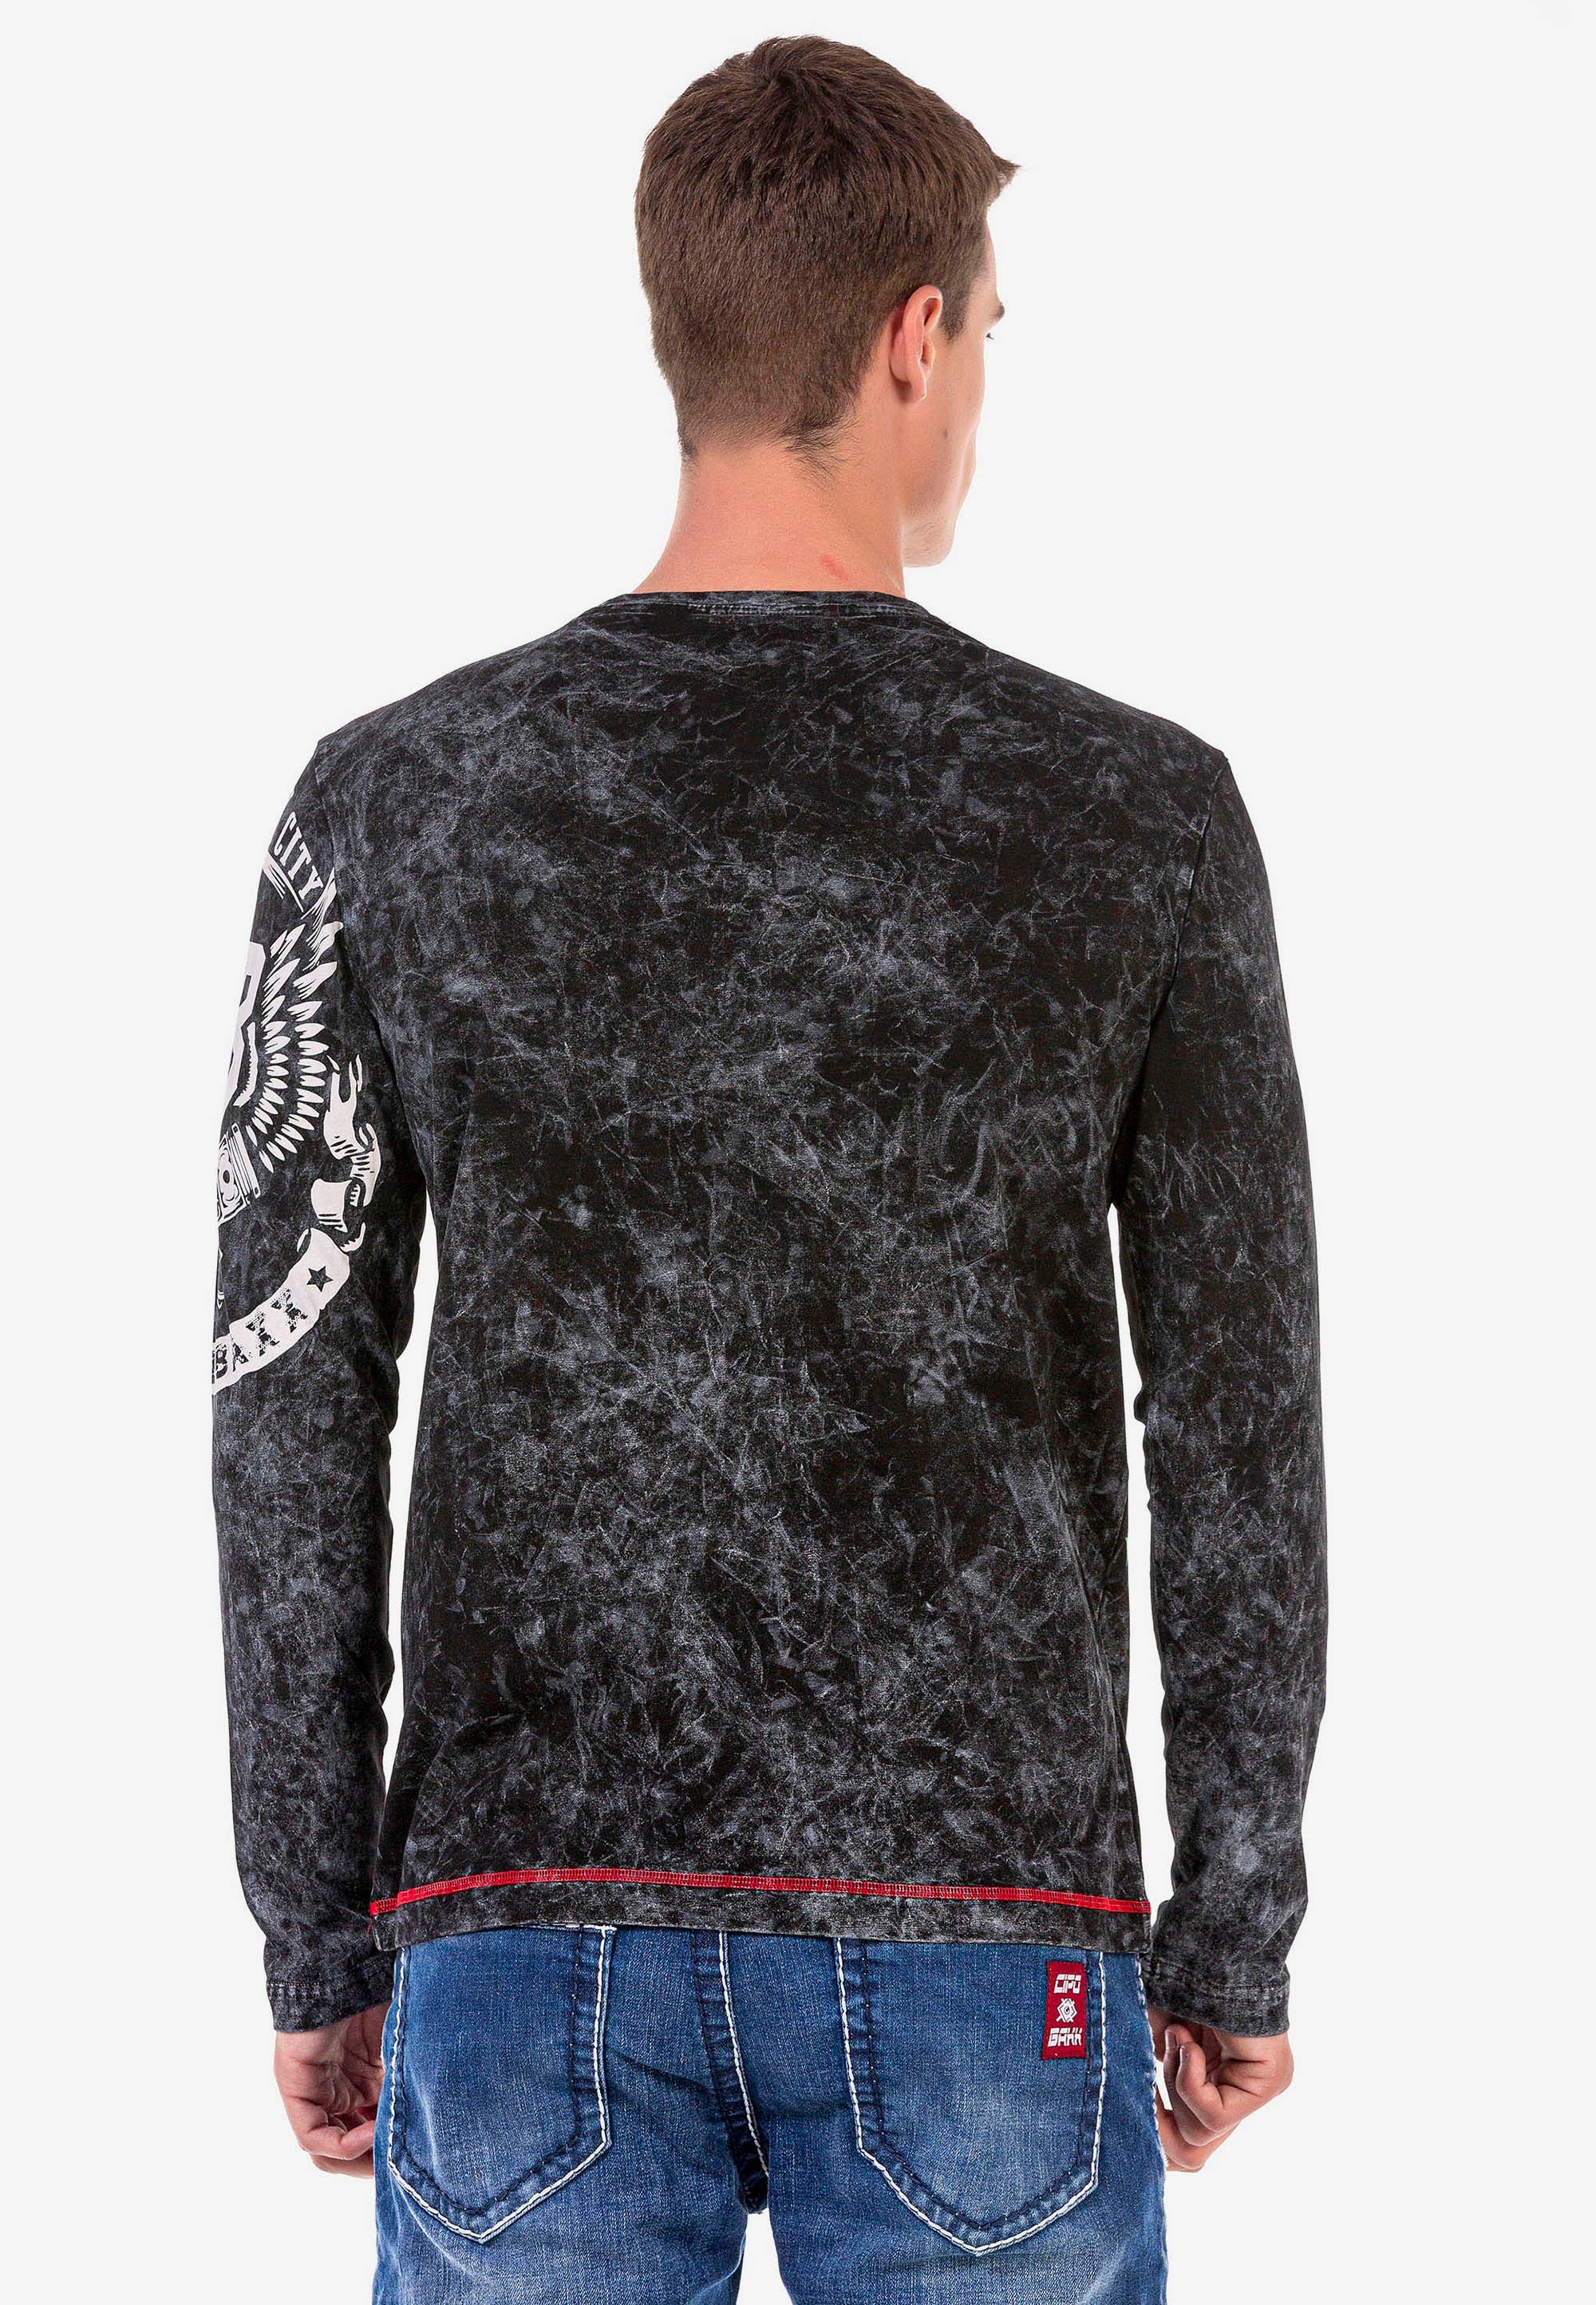 & Baxx Cipo mit Markenprint schwarz coolem Langarmshirt